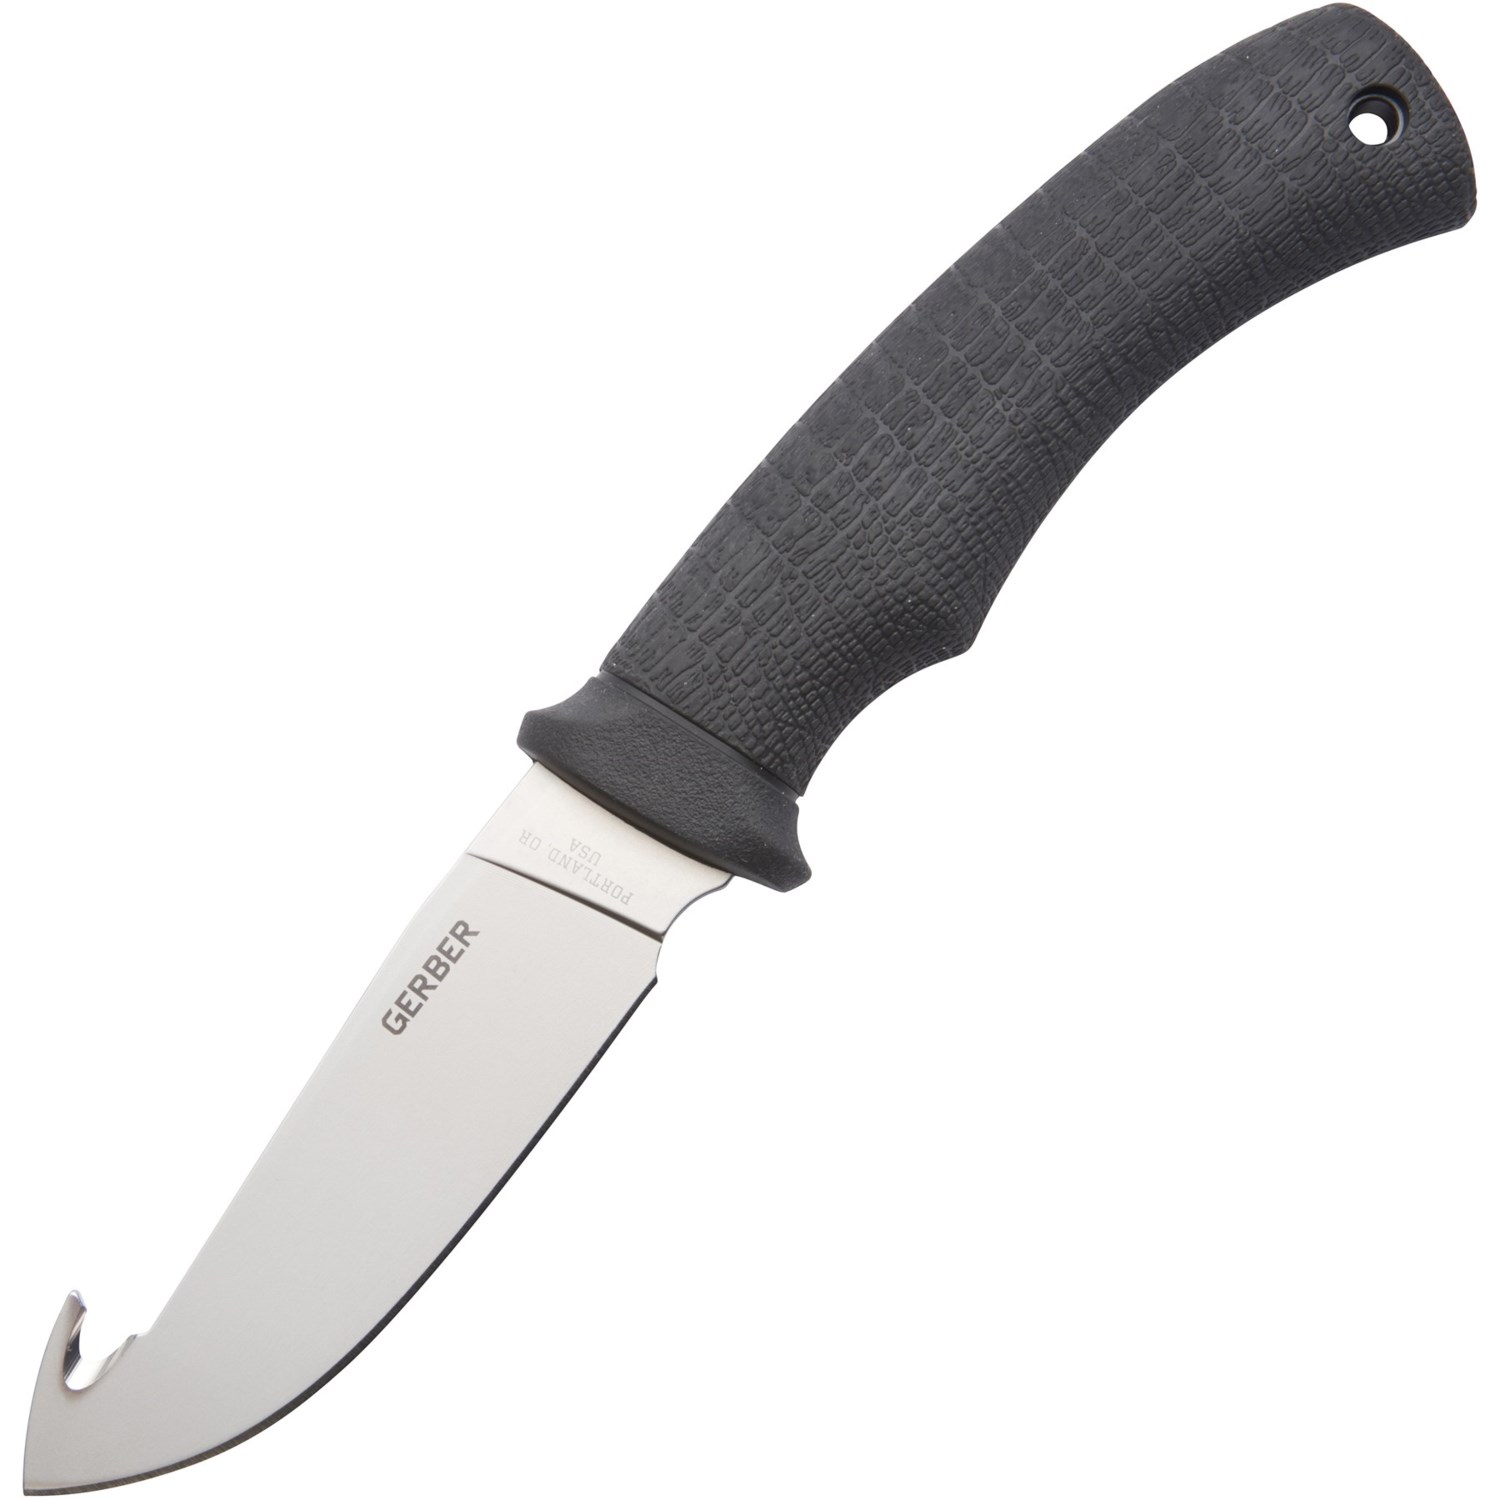 Gerber Gator Fixed Blade Knife with Sheath - 4” - Save 30%